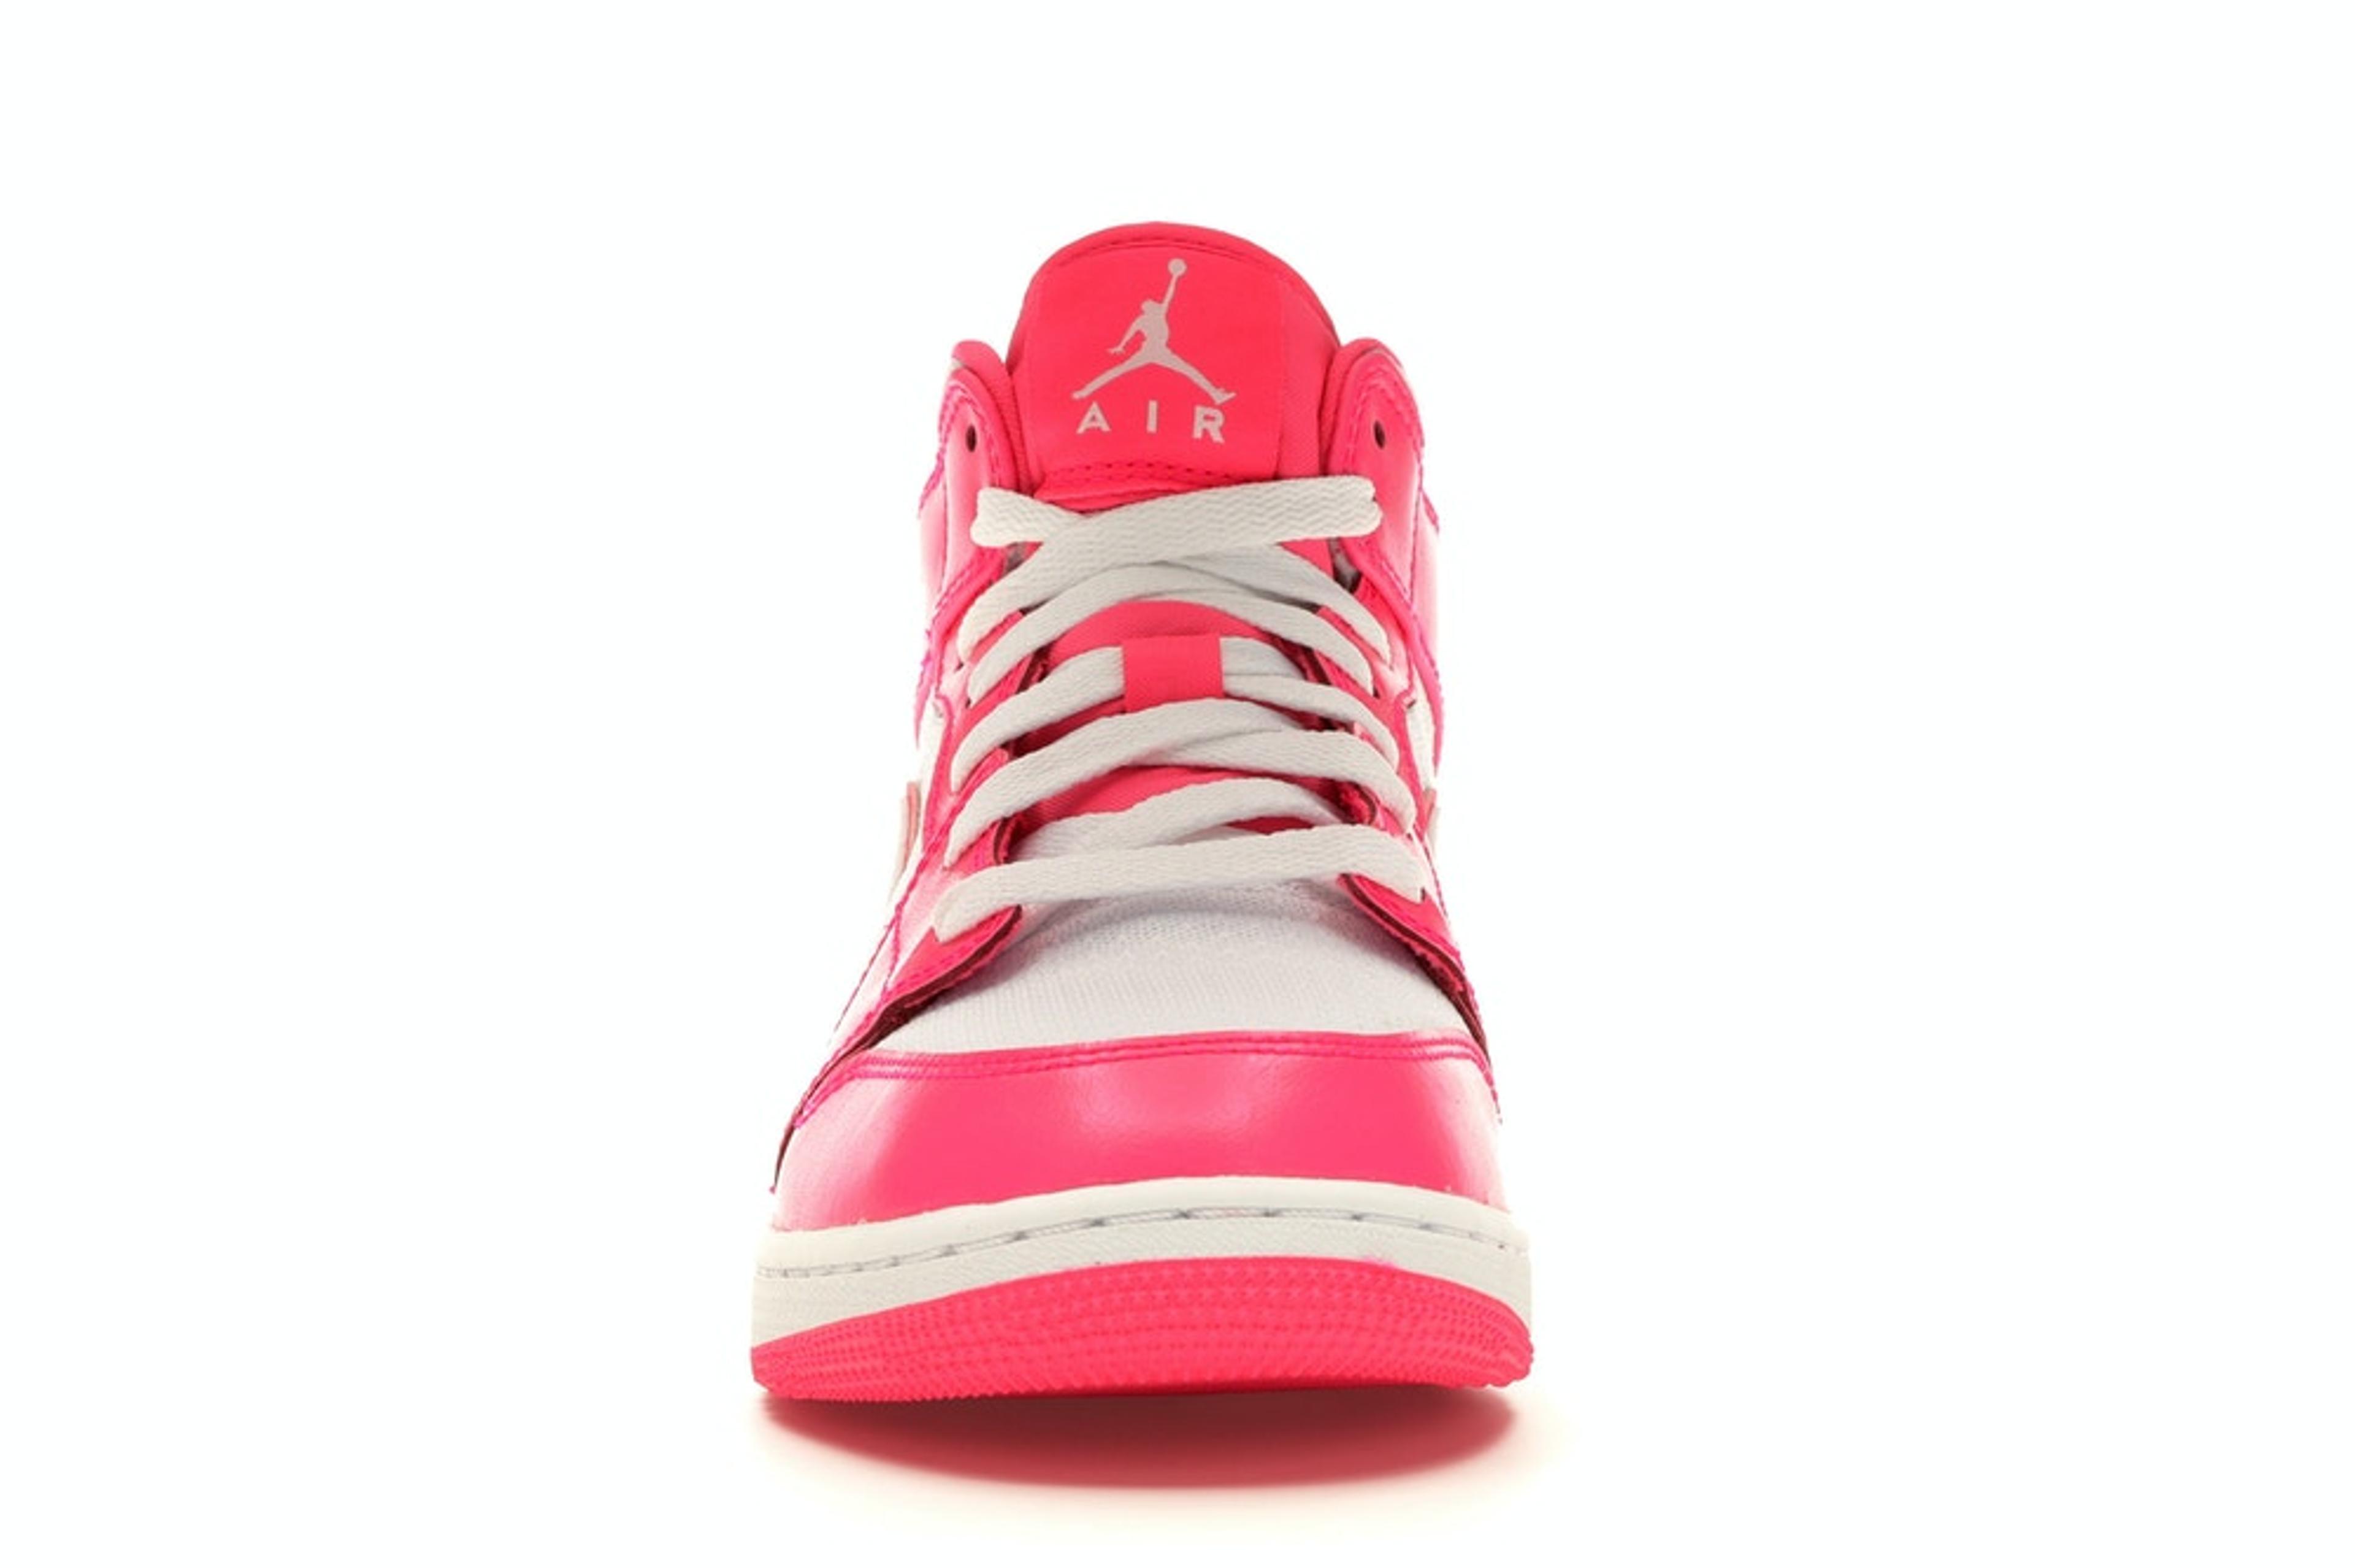 Alternate View 1 of Air Jordan 1 Mid "Hyper Pink" (GS)